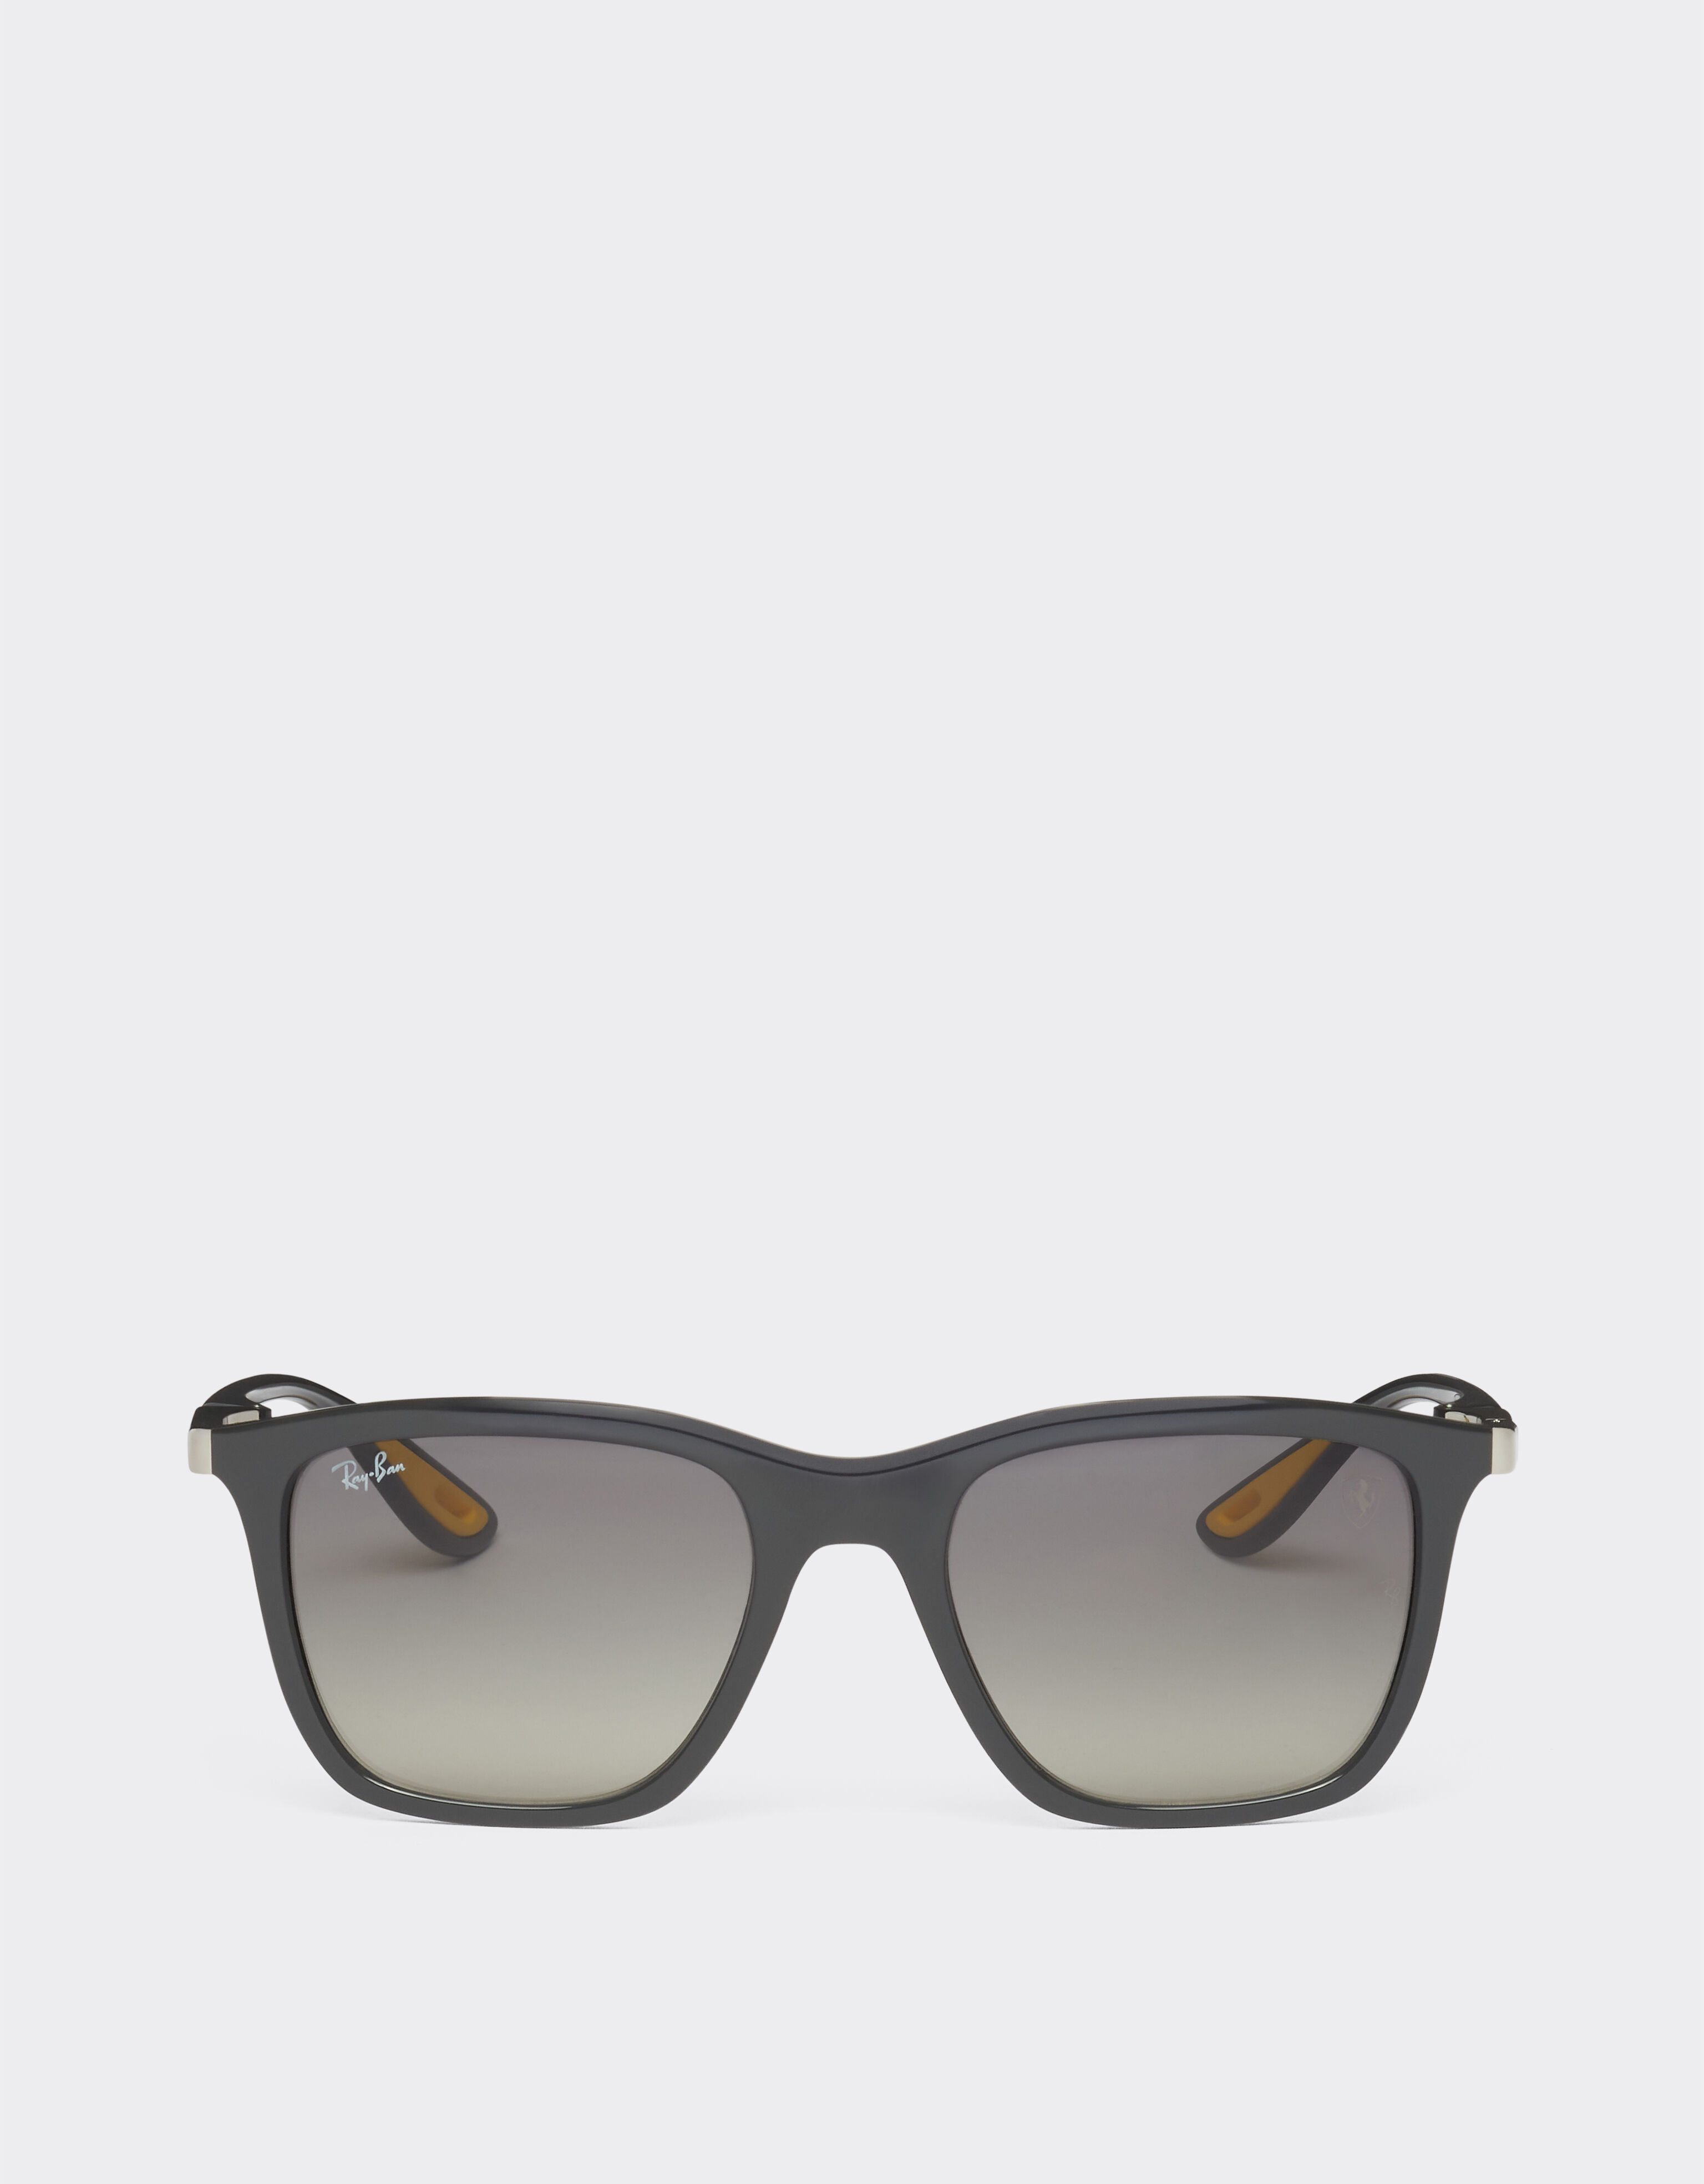 Ferrari Ray-Ban for Scuderia Ferrari 0RB4433M grey sunglasses with gradient grey lenses Black Matt F1257f